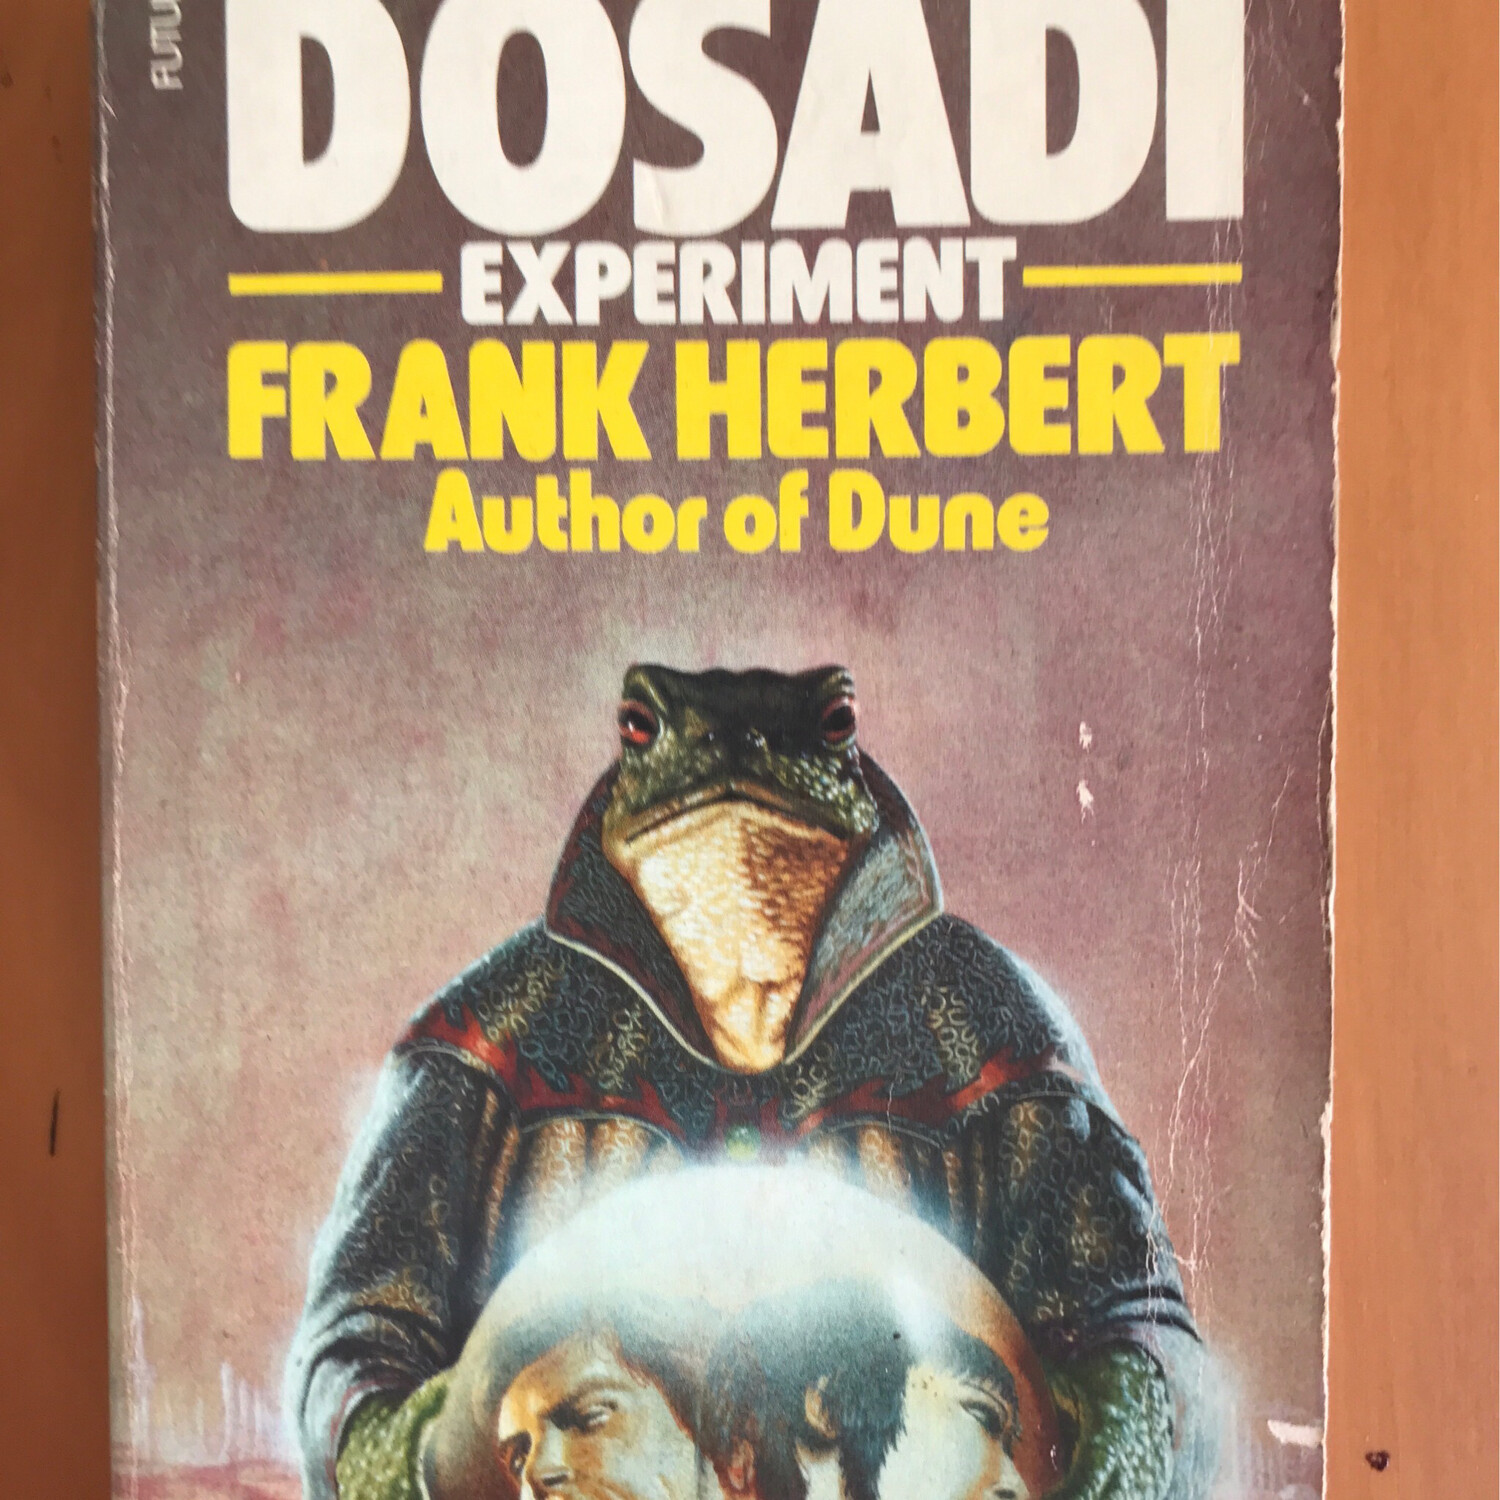 The Dosadi Experiment, Frank Herbert